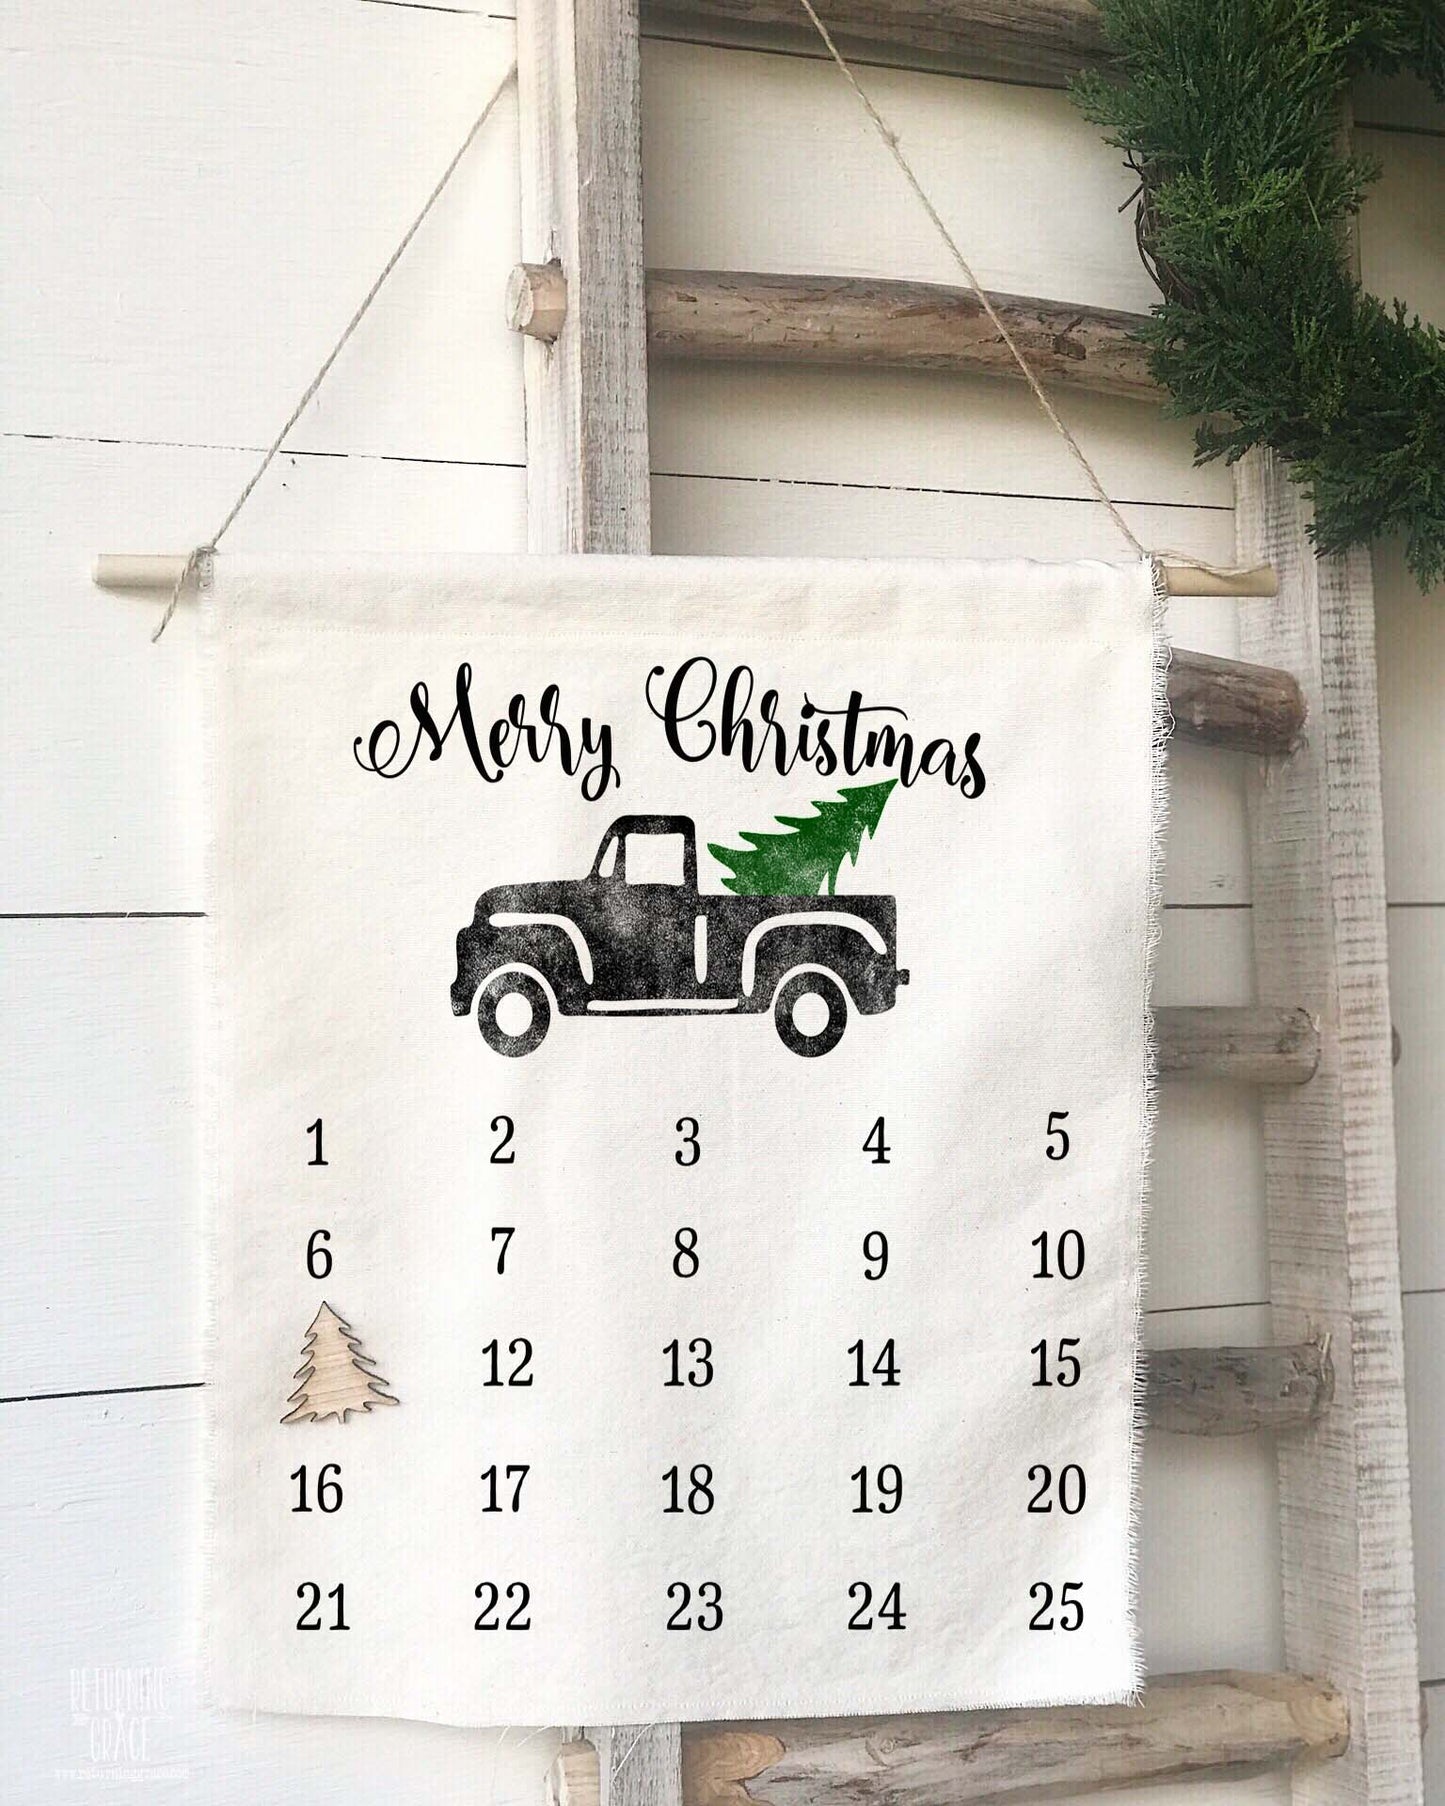 Merry Christmas Vintage Truck Countdown Calendar - Returning Grace Designs